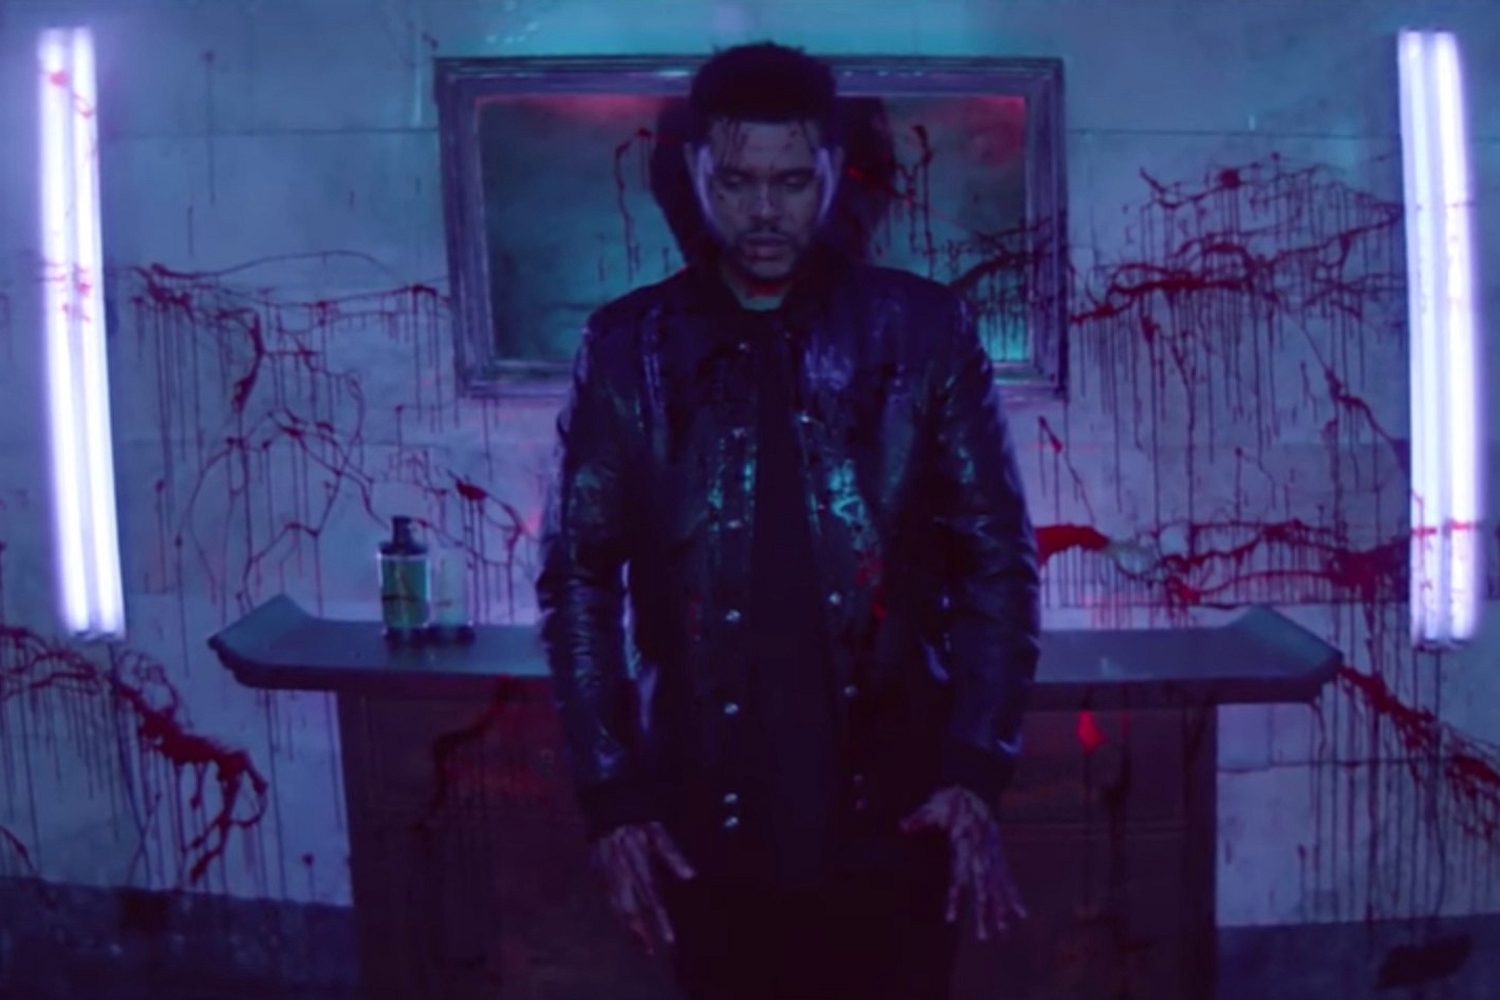 The Weeknd airs ‘M A N I A’ short film